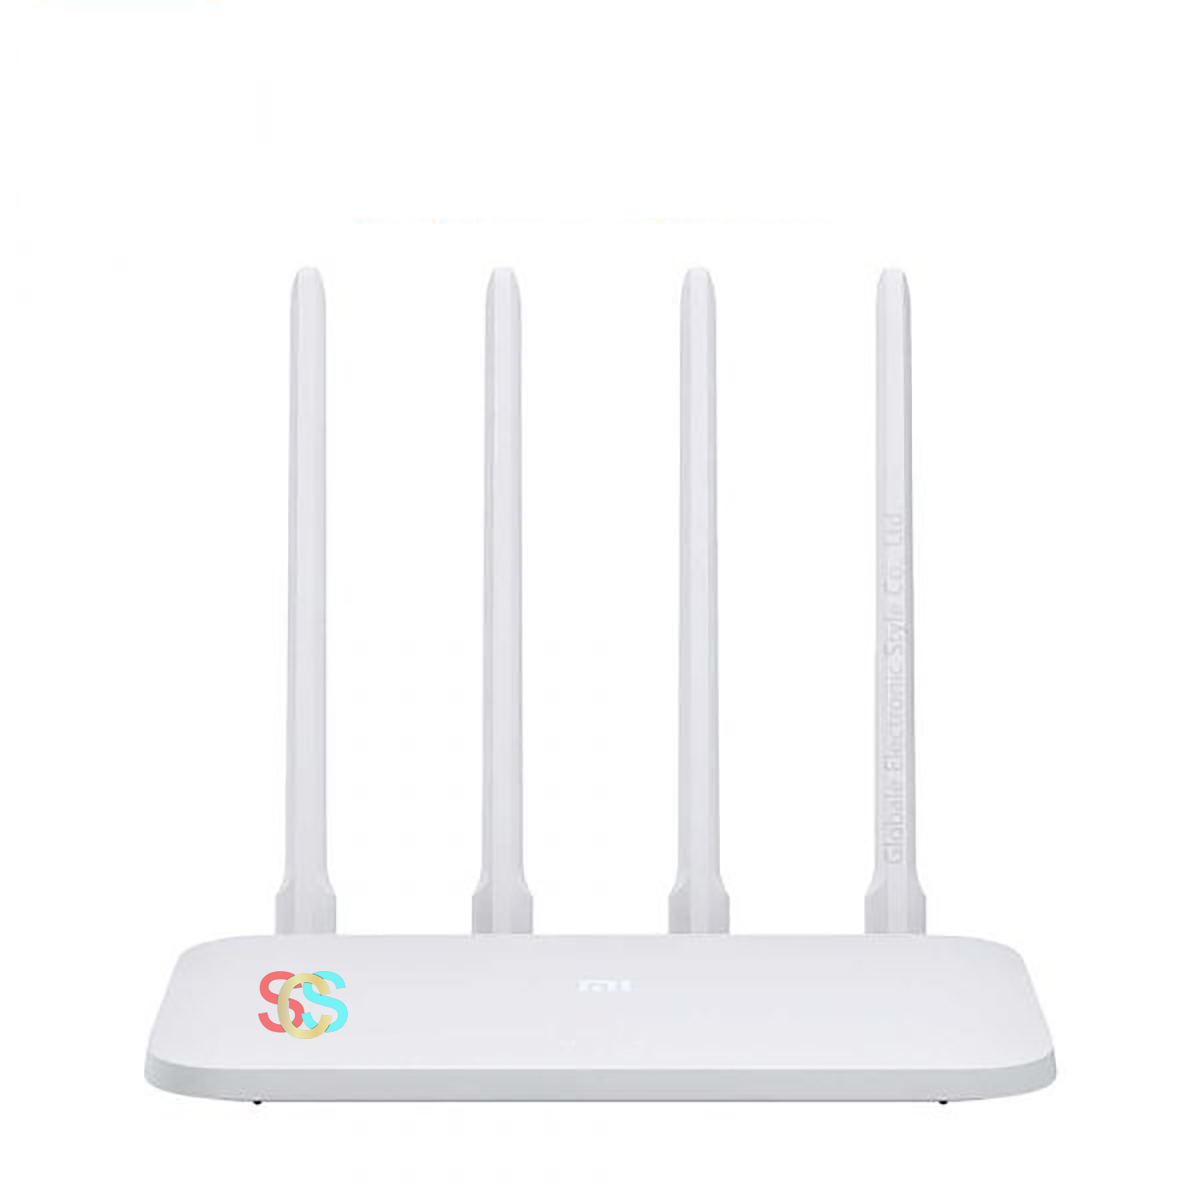 Mi 4C 300 Mbps Ethernet Single-Band Wi-Fi Router (White)